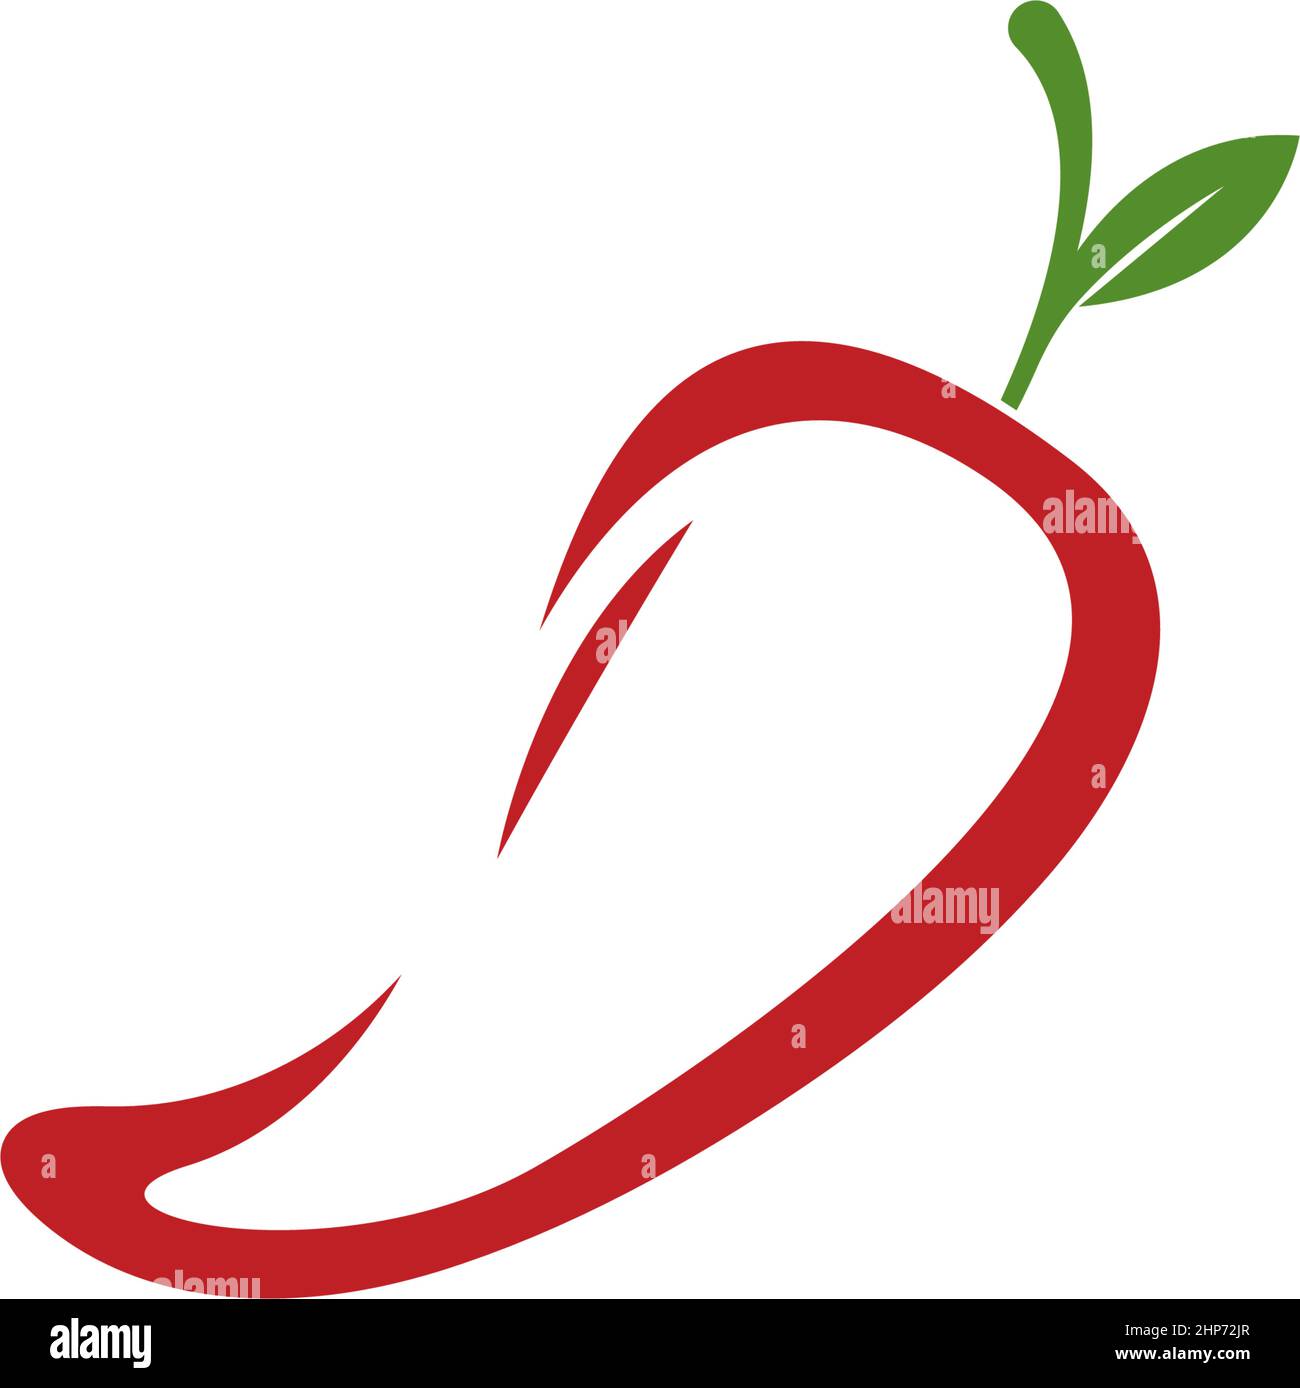 Chilli, red pepper icon logo design illustration Stock Vector